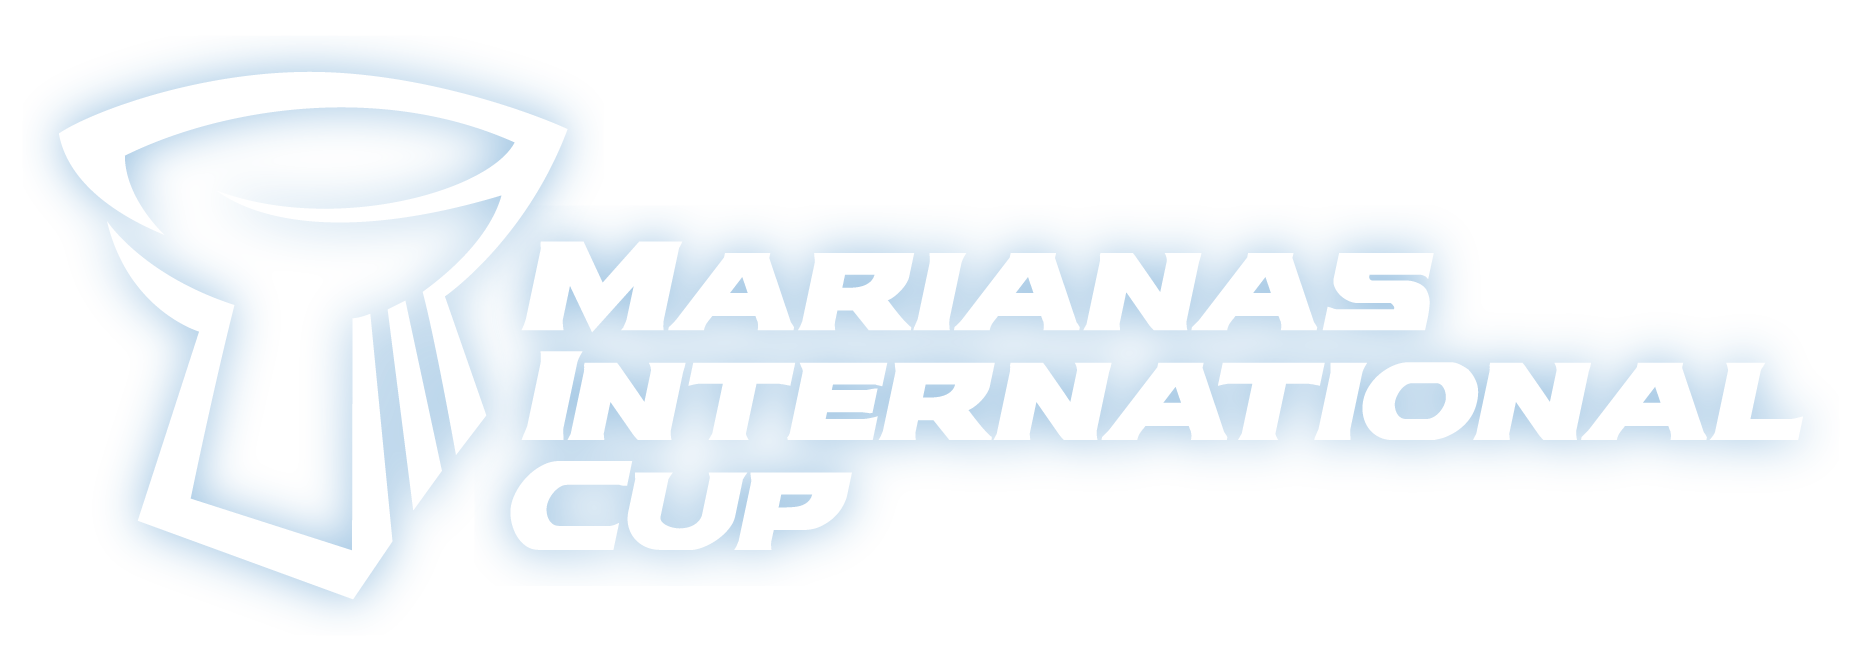 MARIANAS INTERNATIONAL CUP 2018